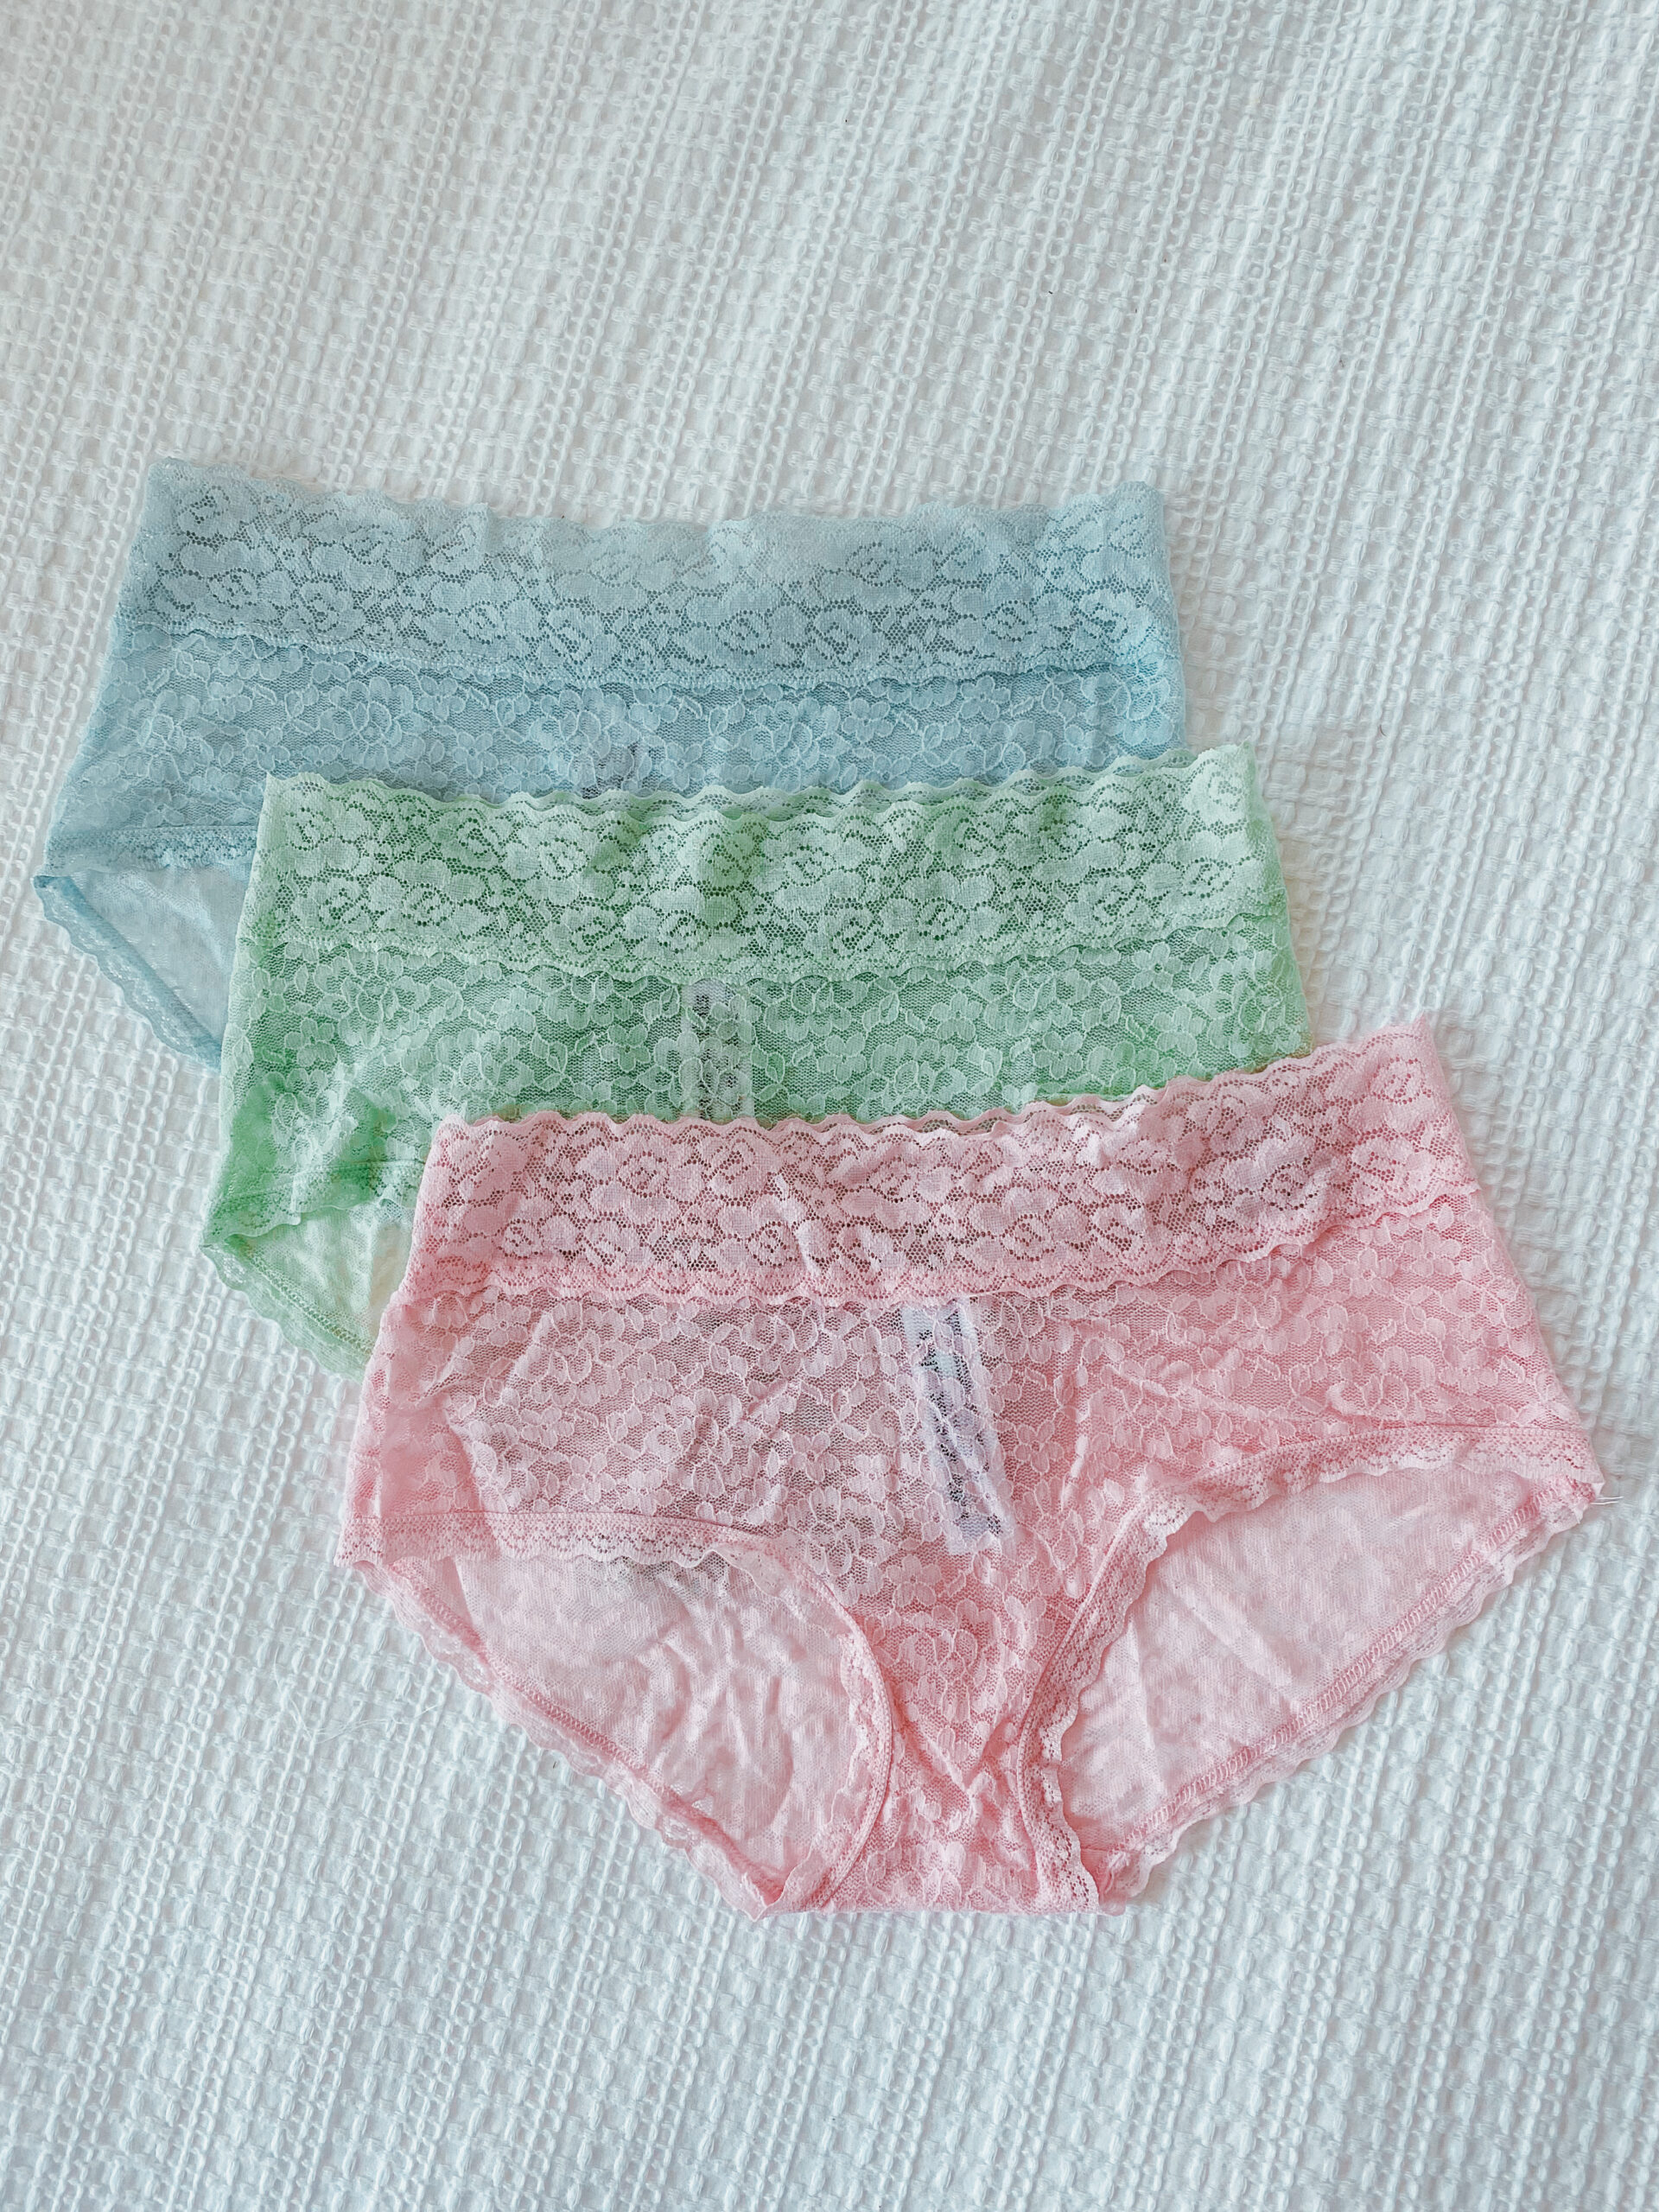 My Favorite Undies/Panties - Hello Gorgeous, by Angela Lanter